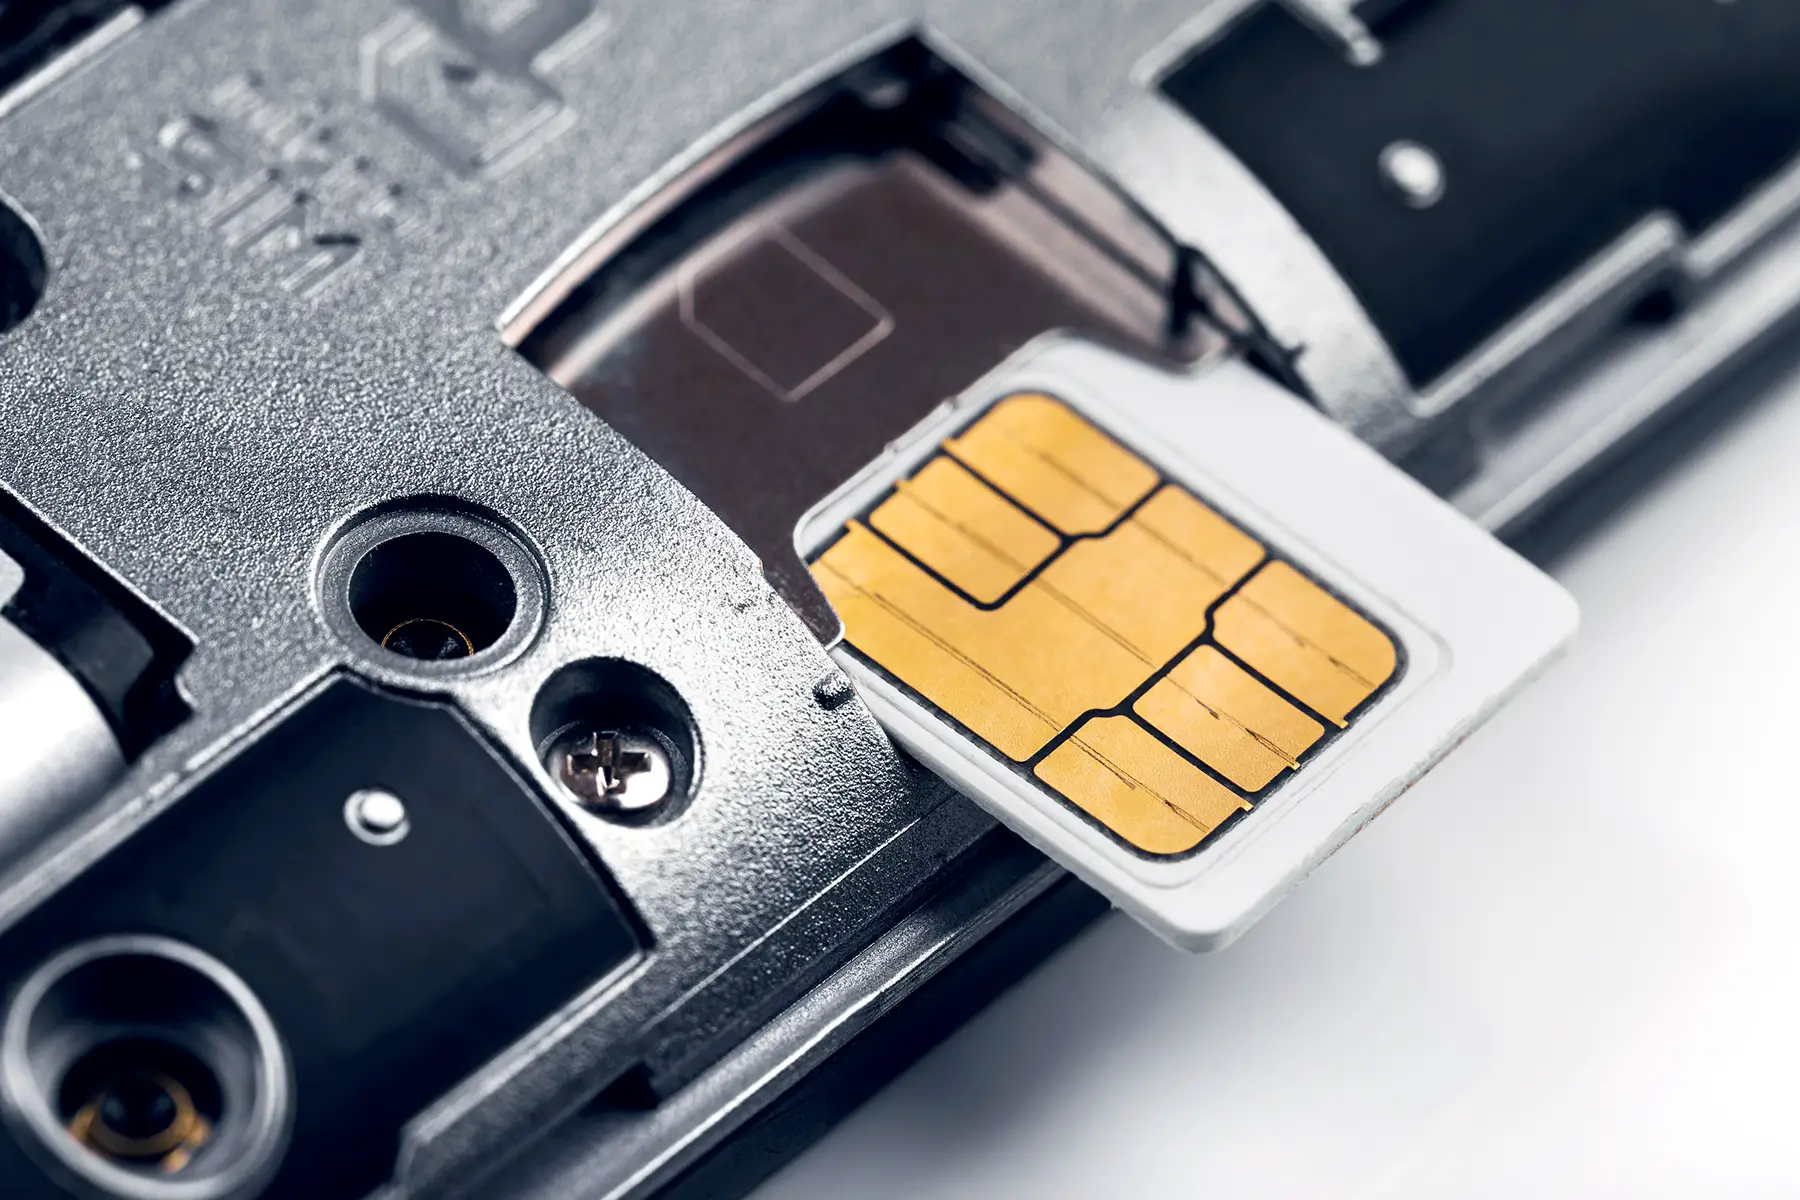 Inserting SIM card